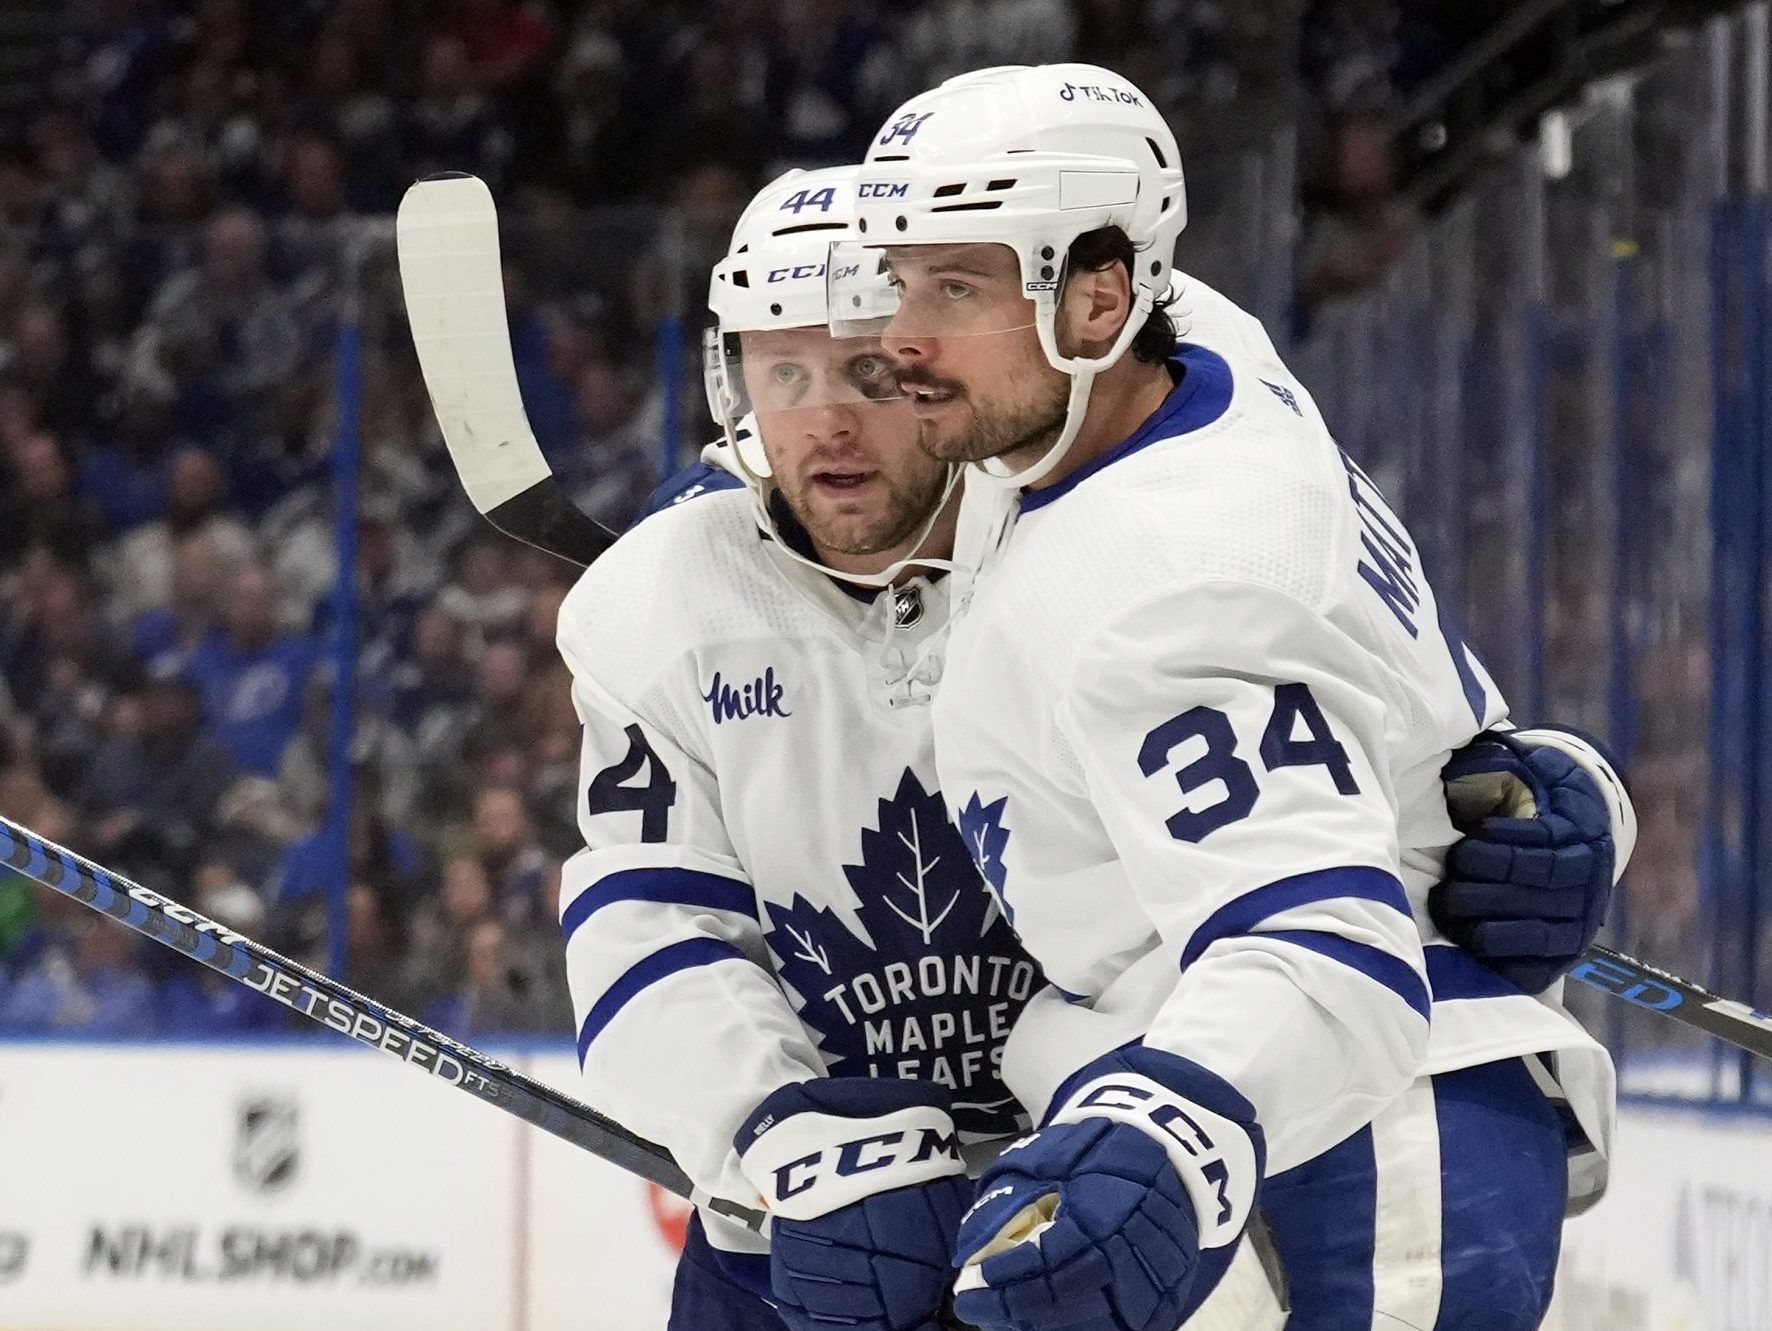 Matthews' hat trick helps Maple Leafs open season with shootout